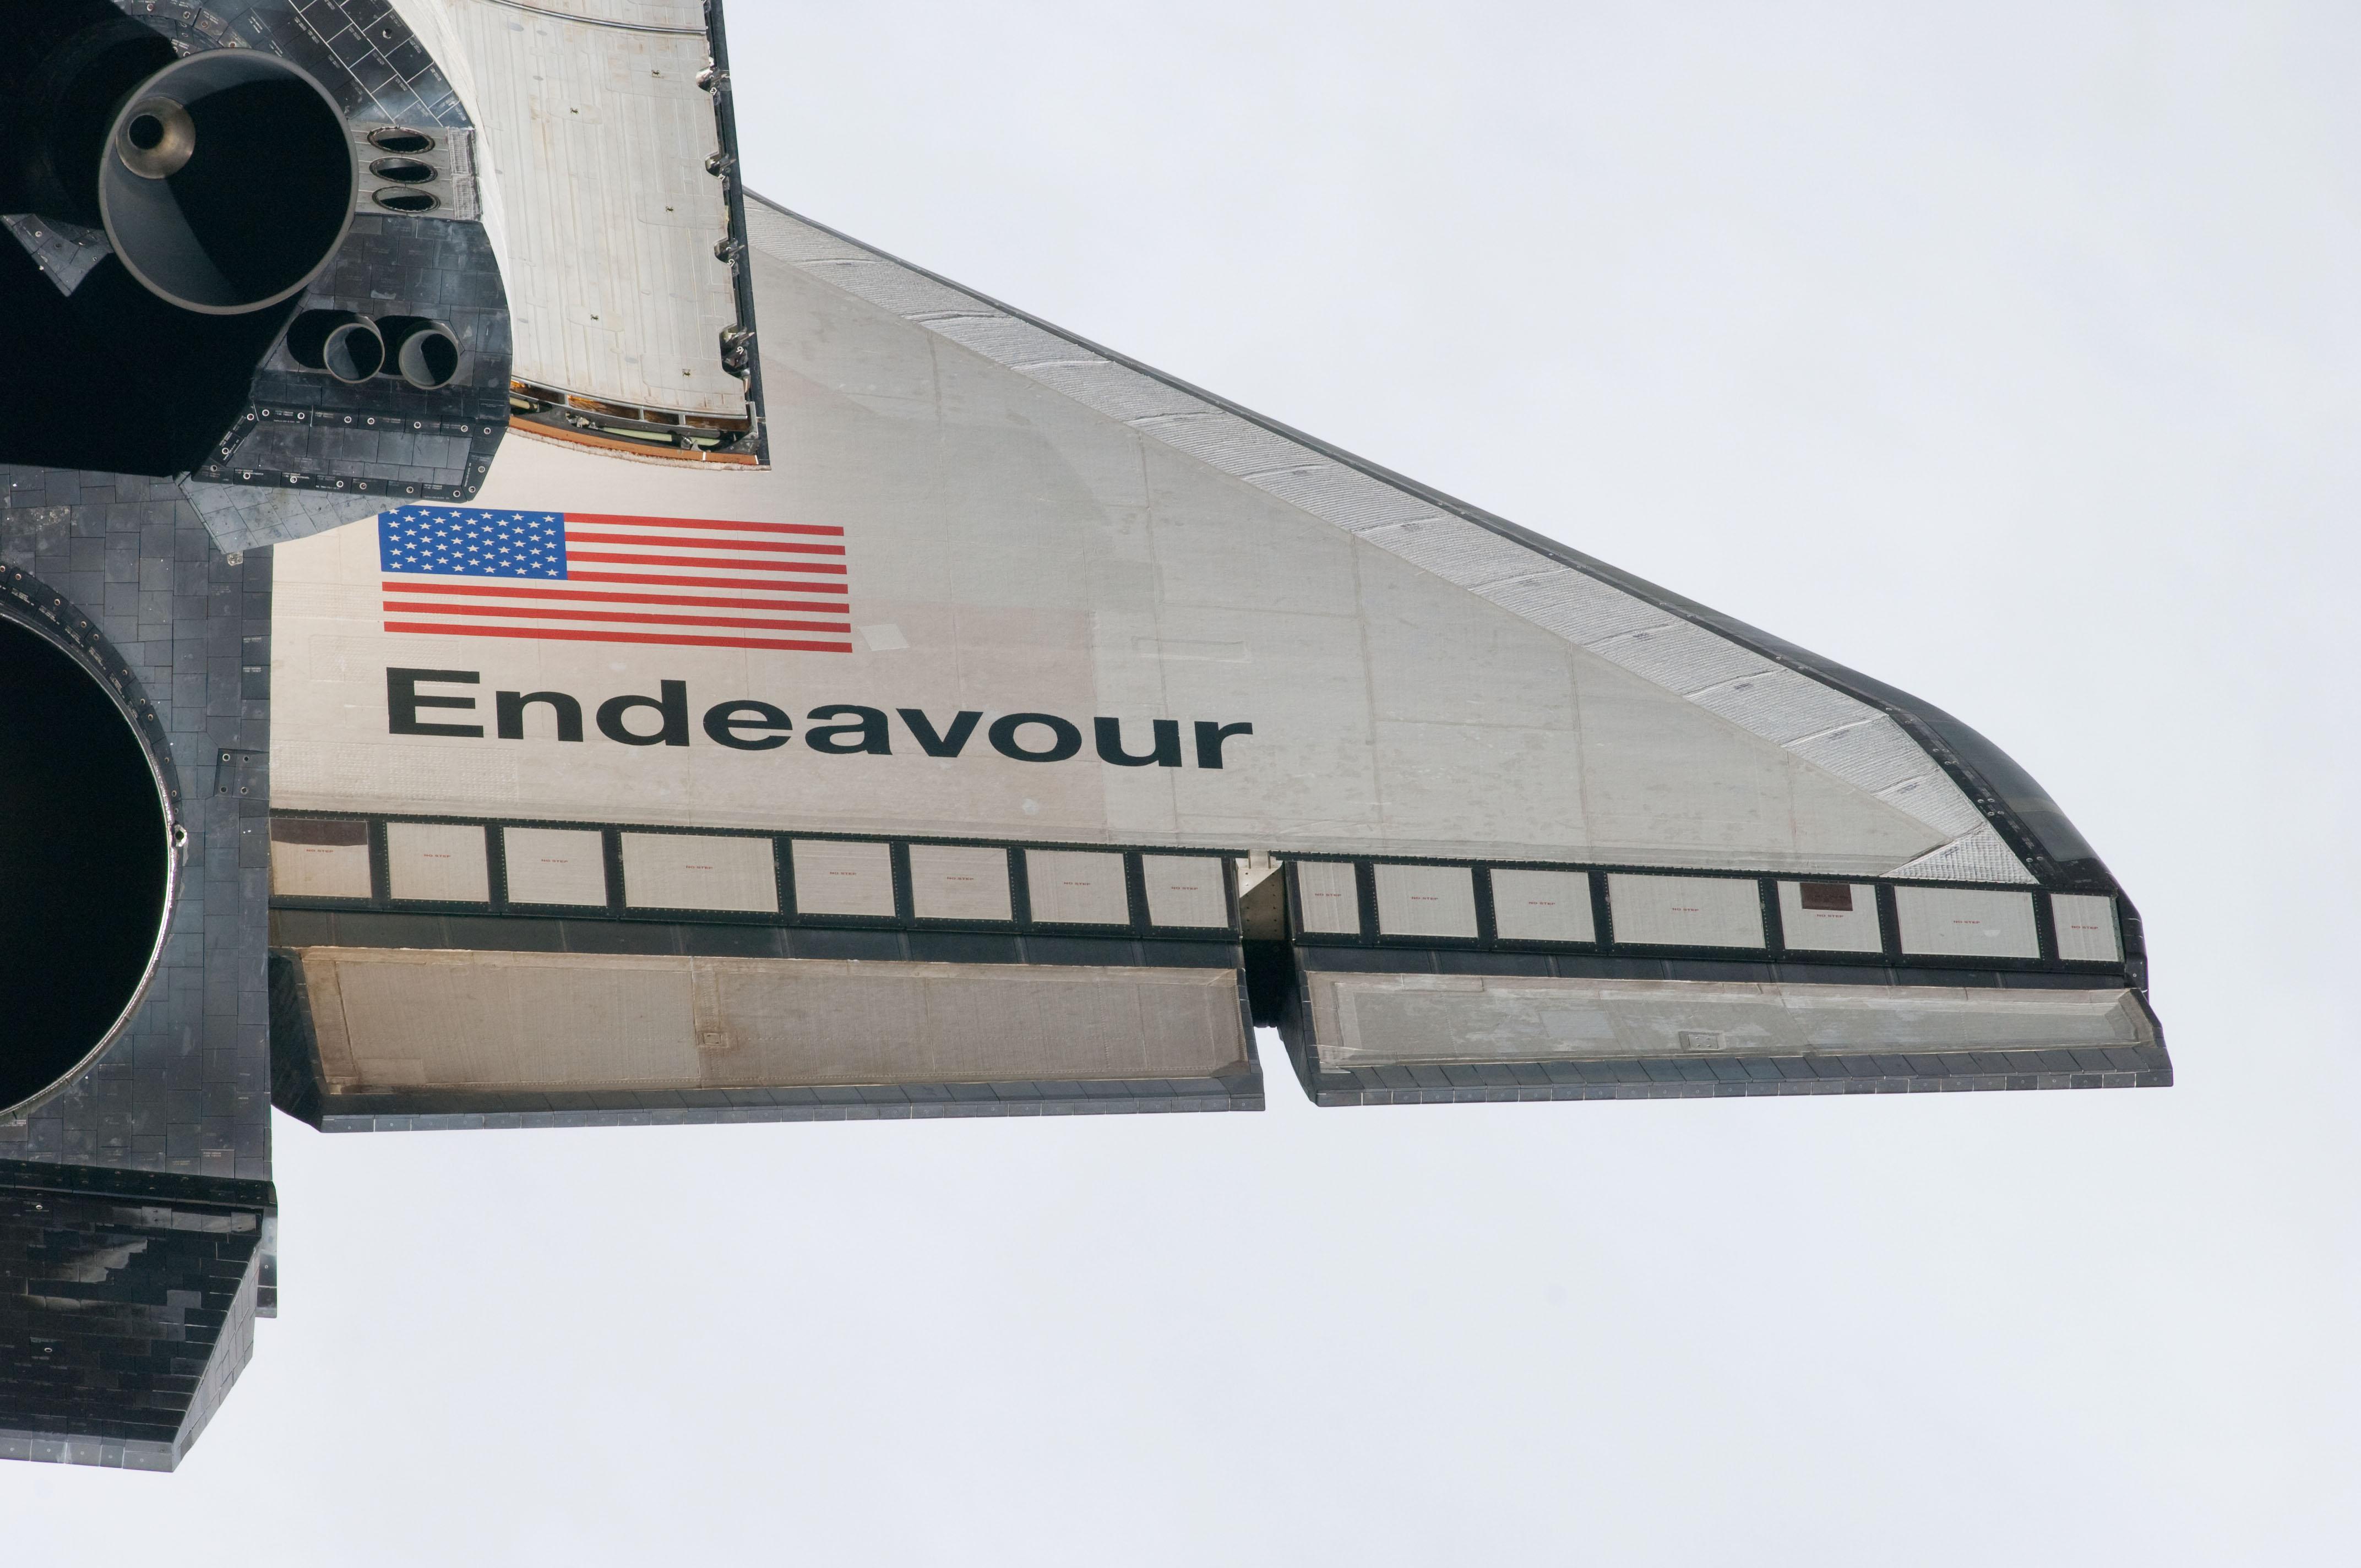 Vehicles Space Shuttle Endeavour 4288x2848